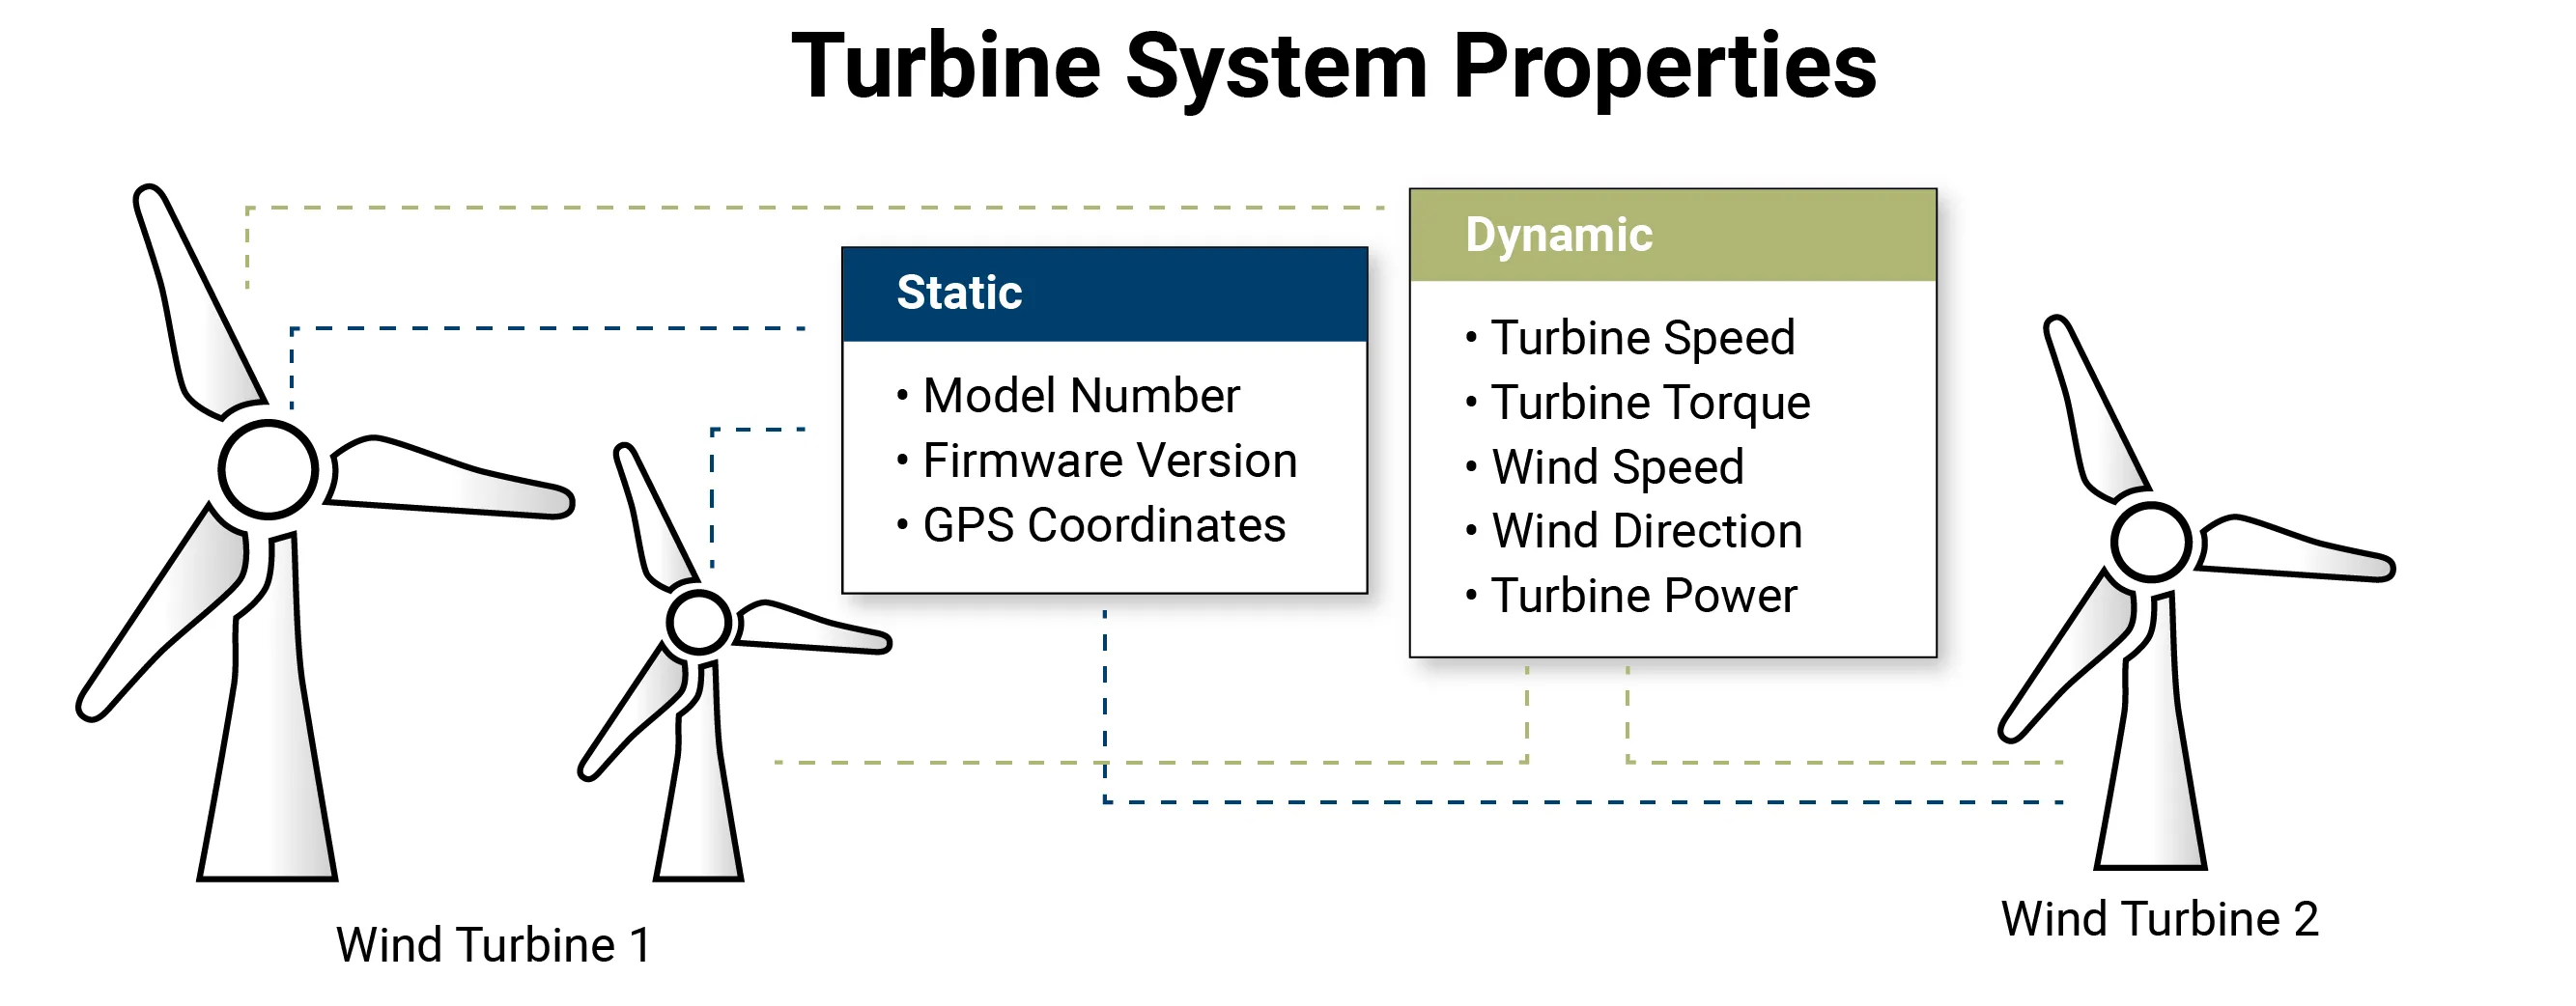 Turbine System Properties